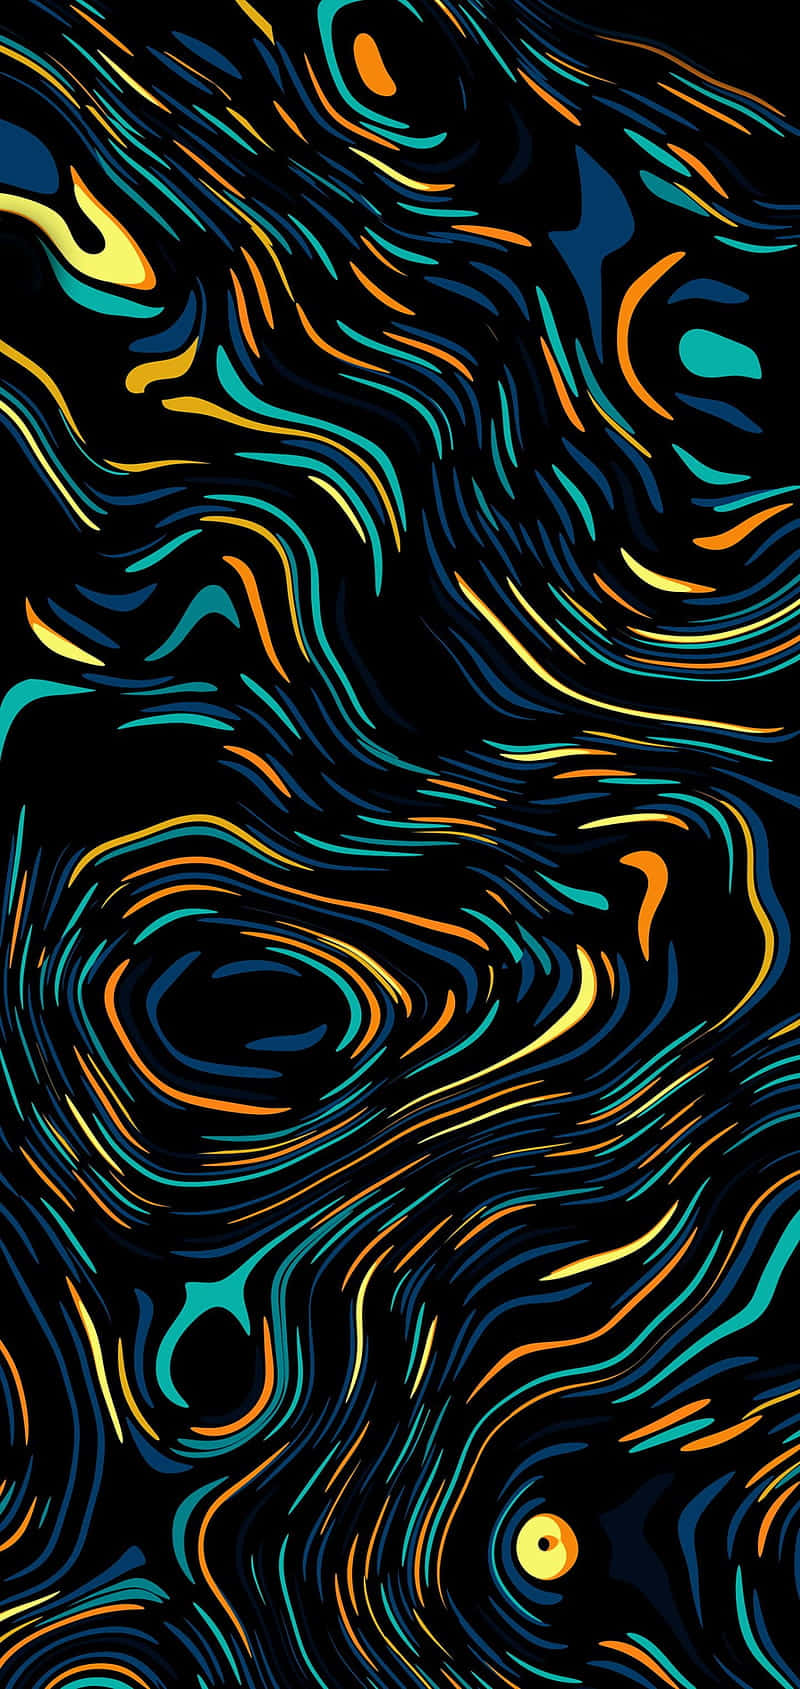 En farverig abstrakt mønster med bølger på en sort baggrund Wallpaper